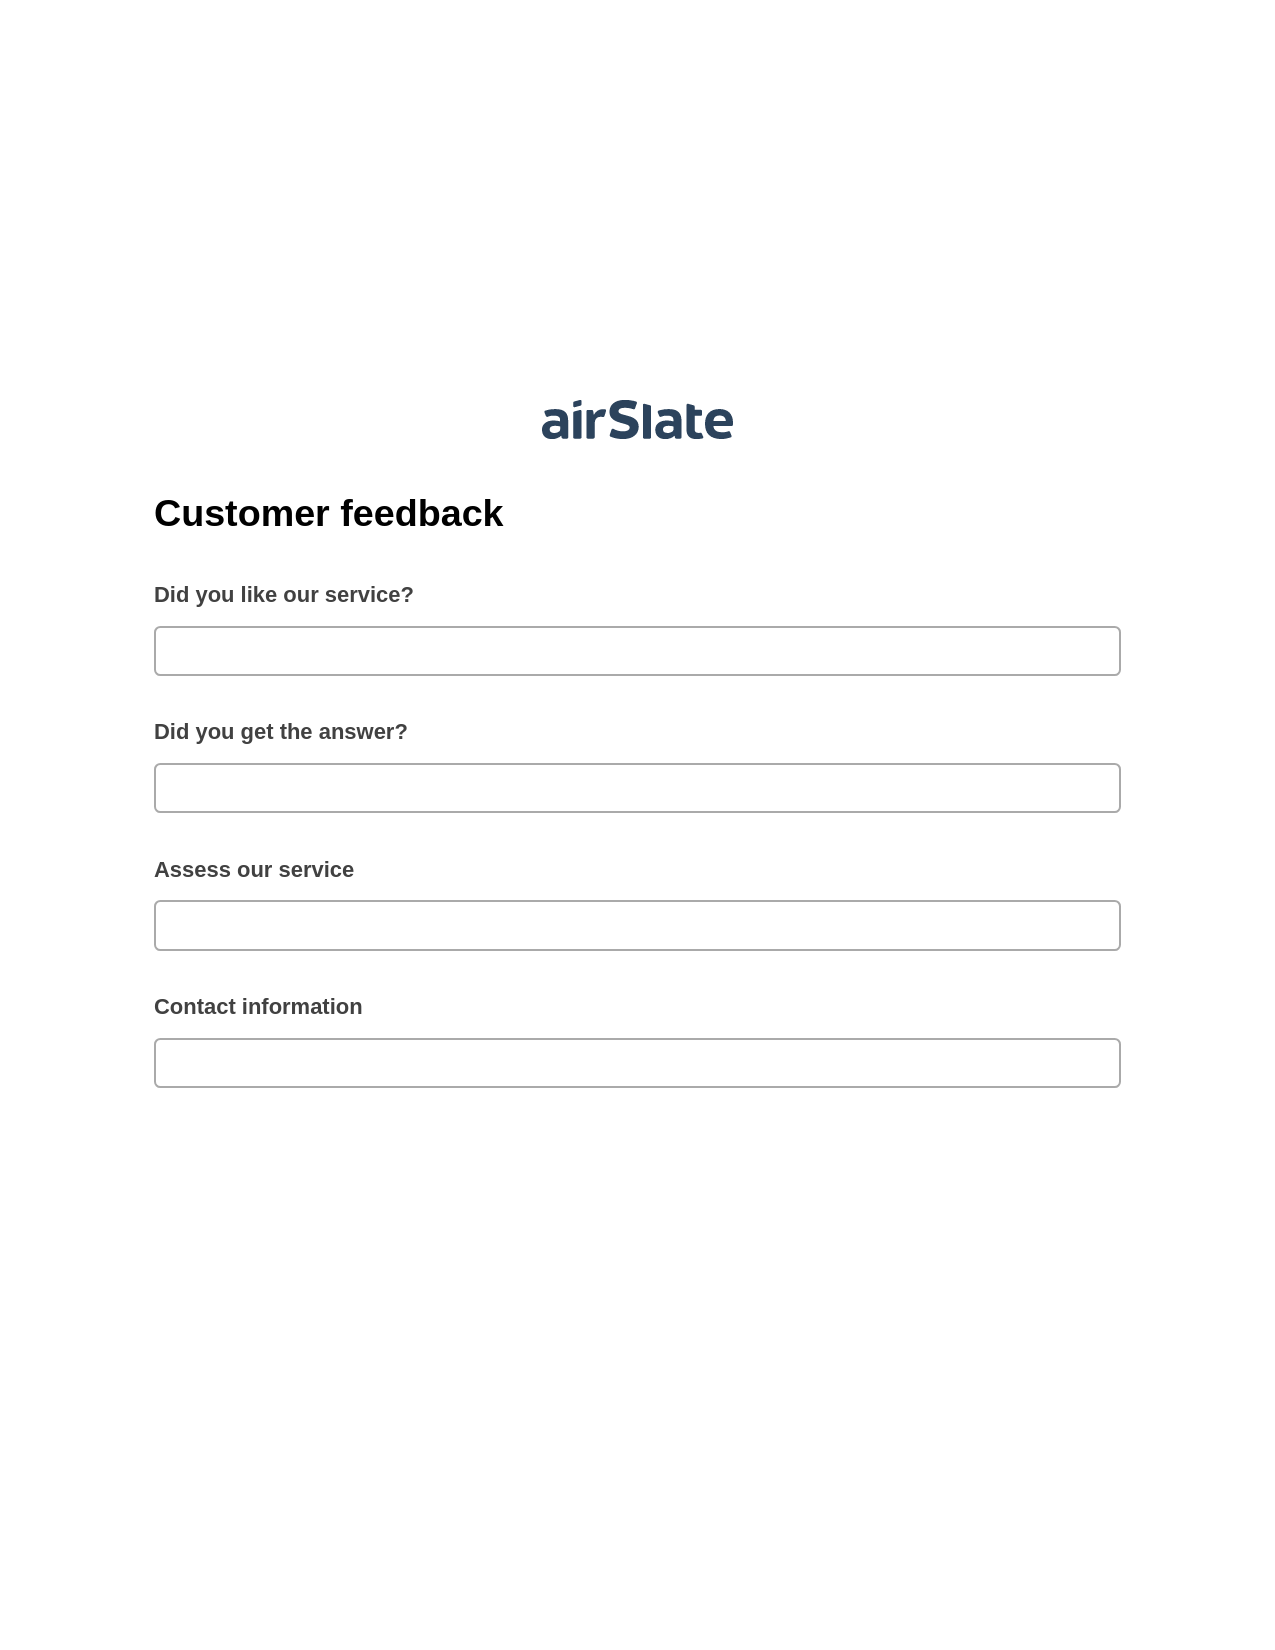 Customer feedback Pre-fill from Google Sheets Bot, SendGrid send Campaign bot, Email Notification Postfinish Bot